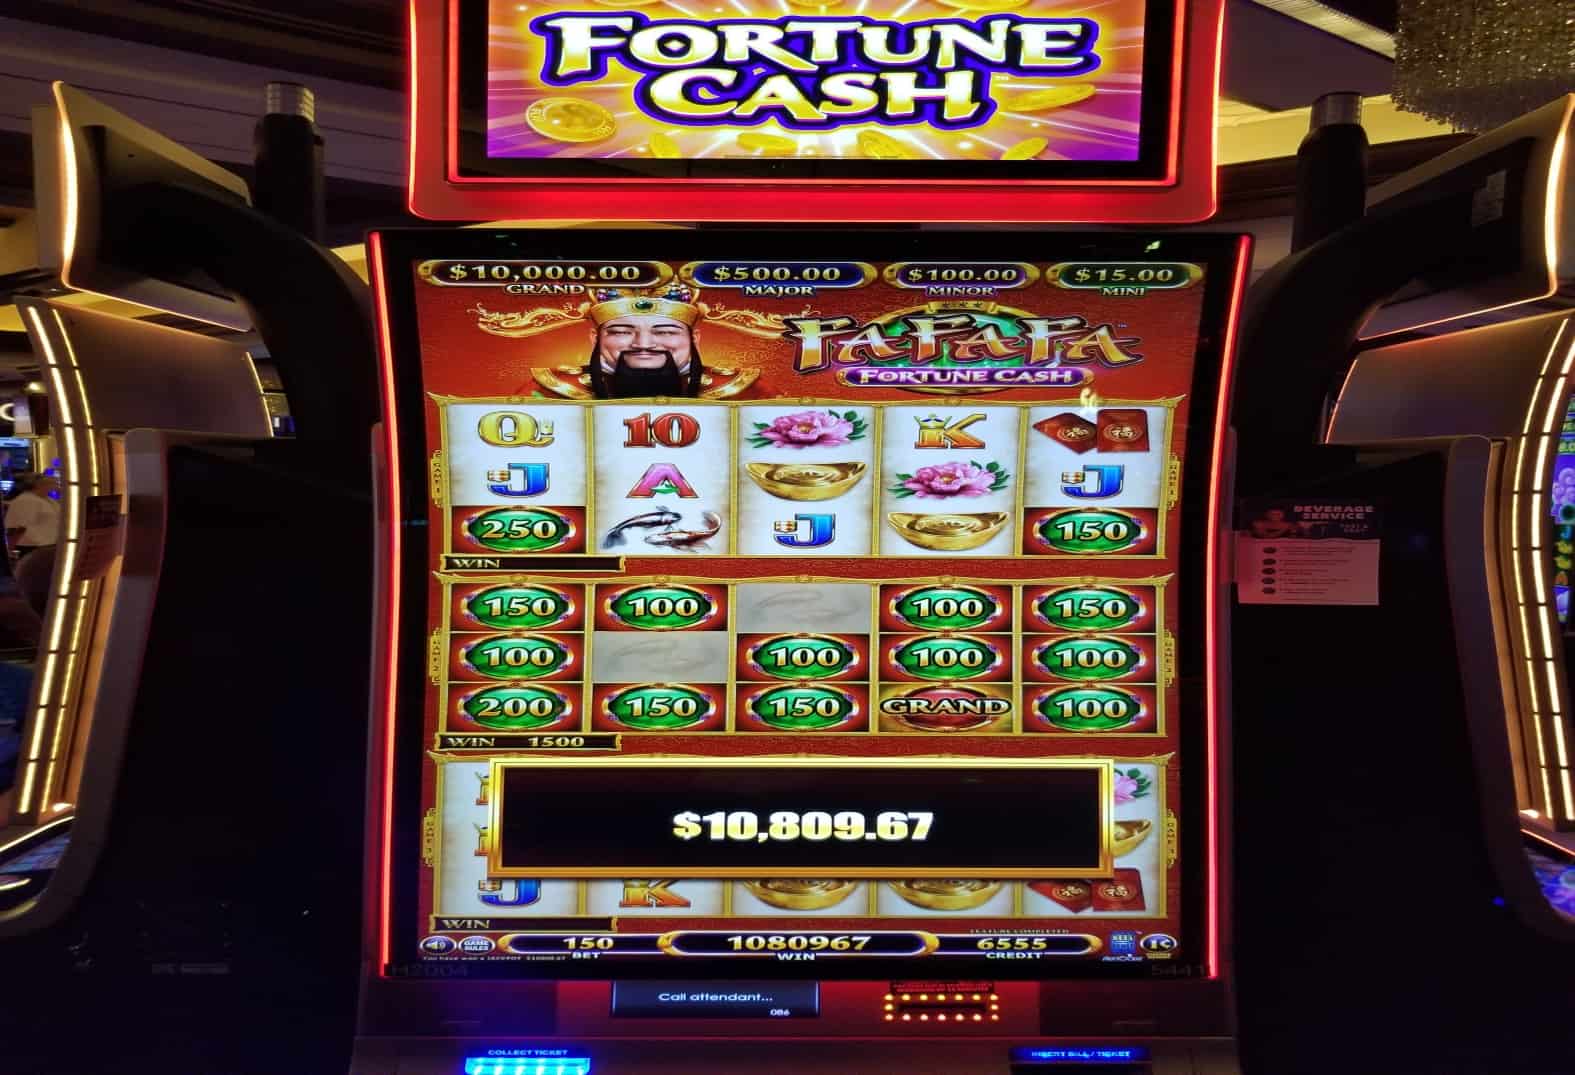 Fortune Cash Jackpot Winner